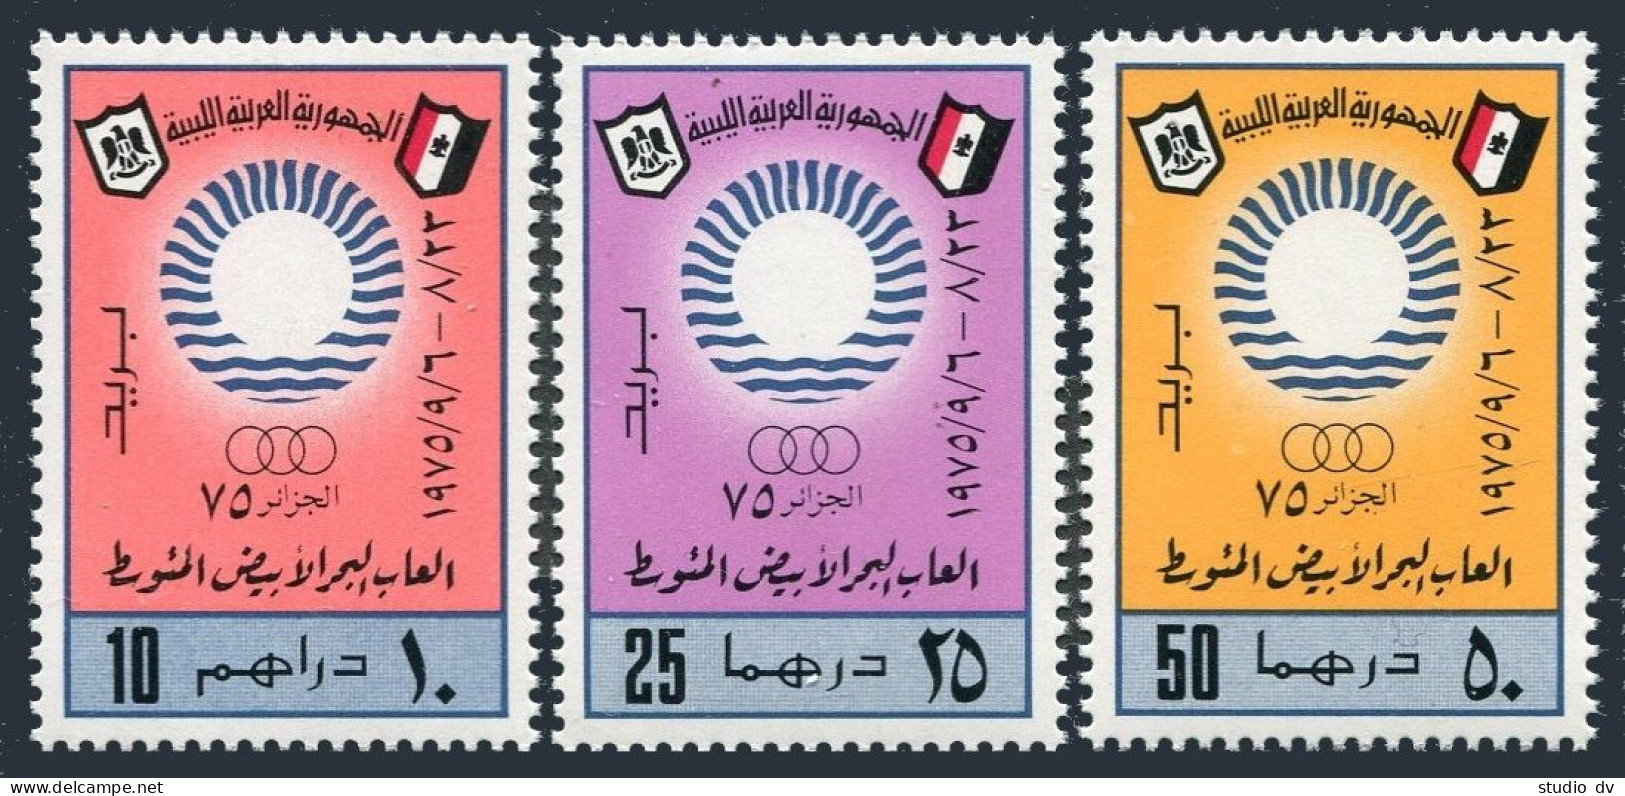 Libya 578-580,MNH.Michel 491-493. Mediterranean Games,Algeria-1975. - Libya